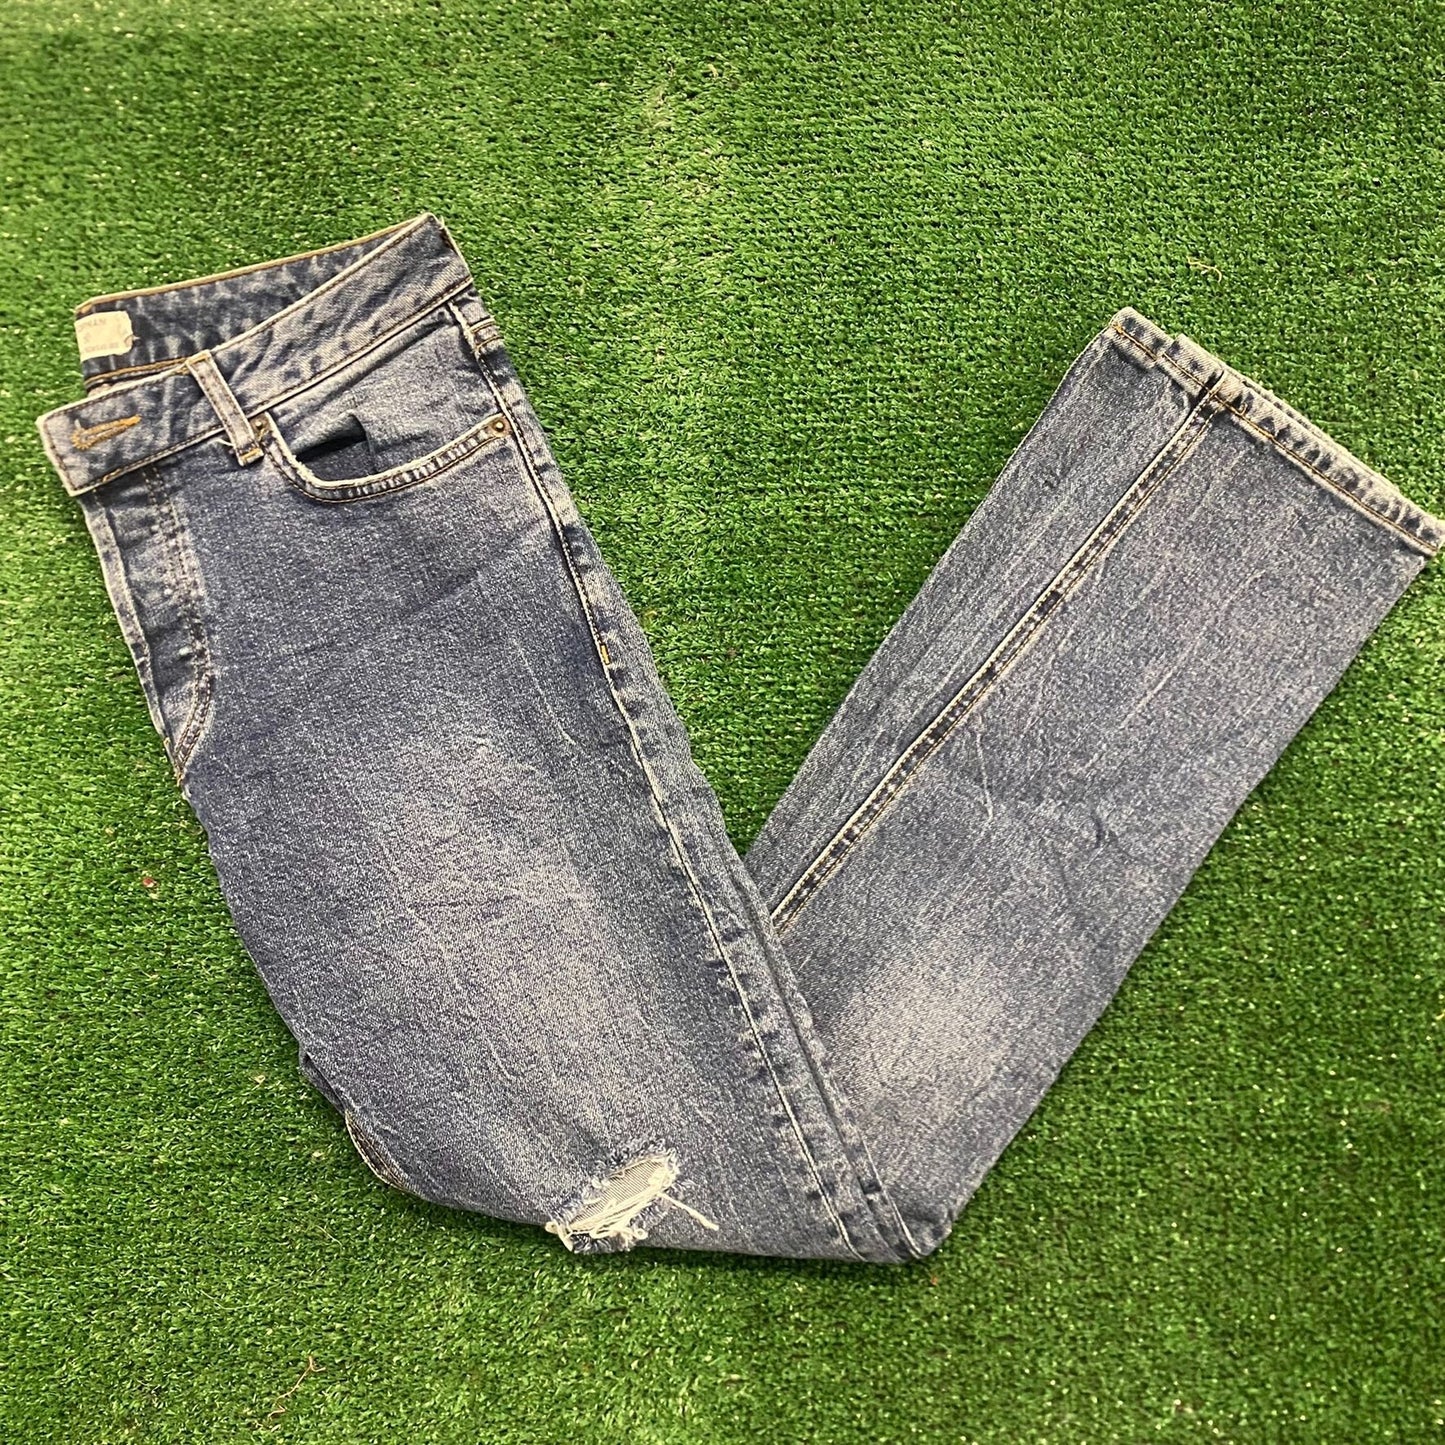 Topman Distressed Vintage Stretch Slim Denim Jeans Pants